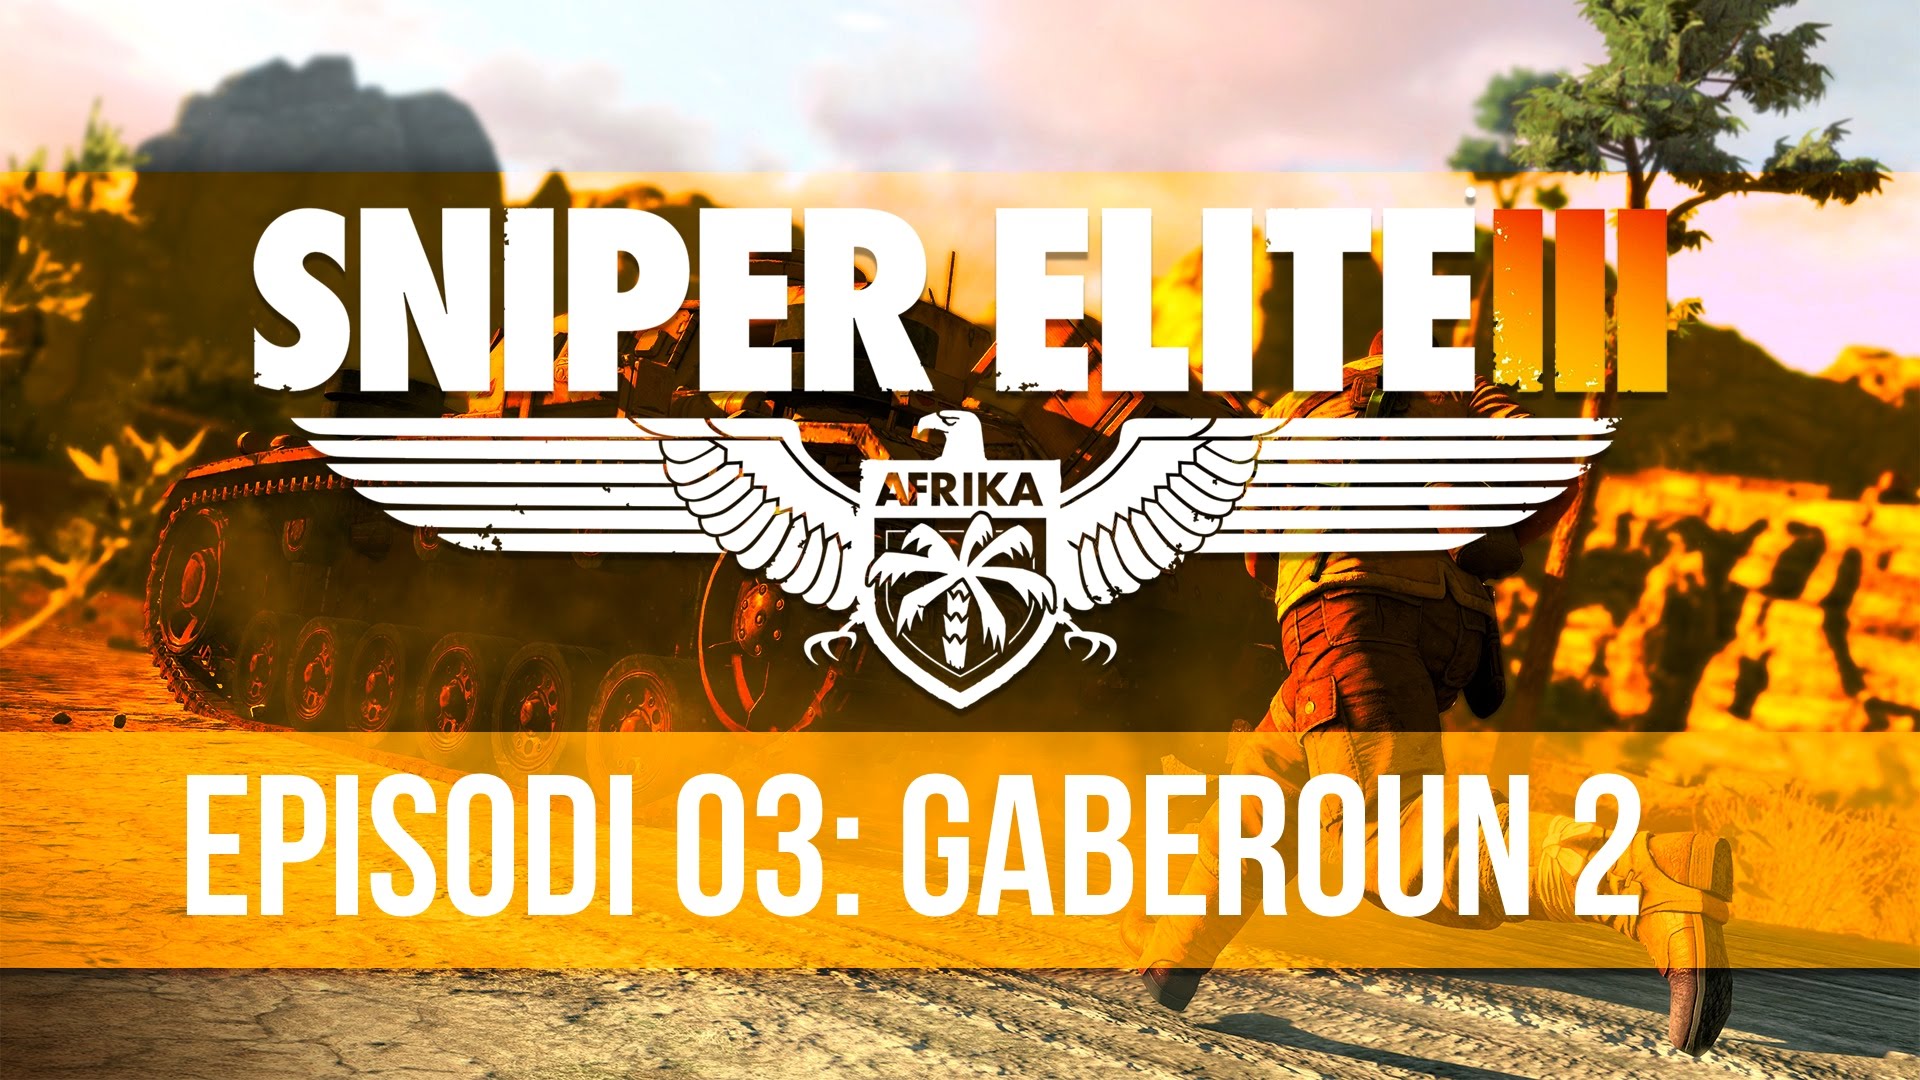 Sniper Elite III - Episodi 3: Gaberoun 2 de Jacint Casademont